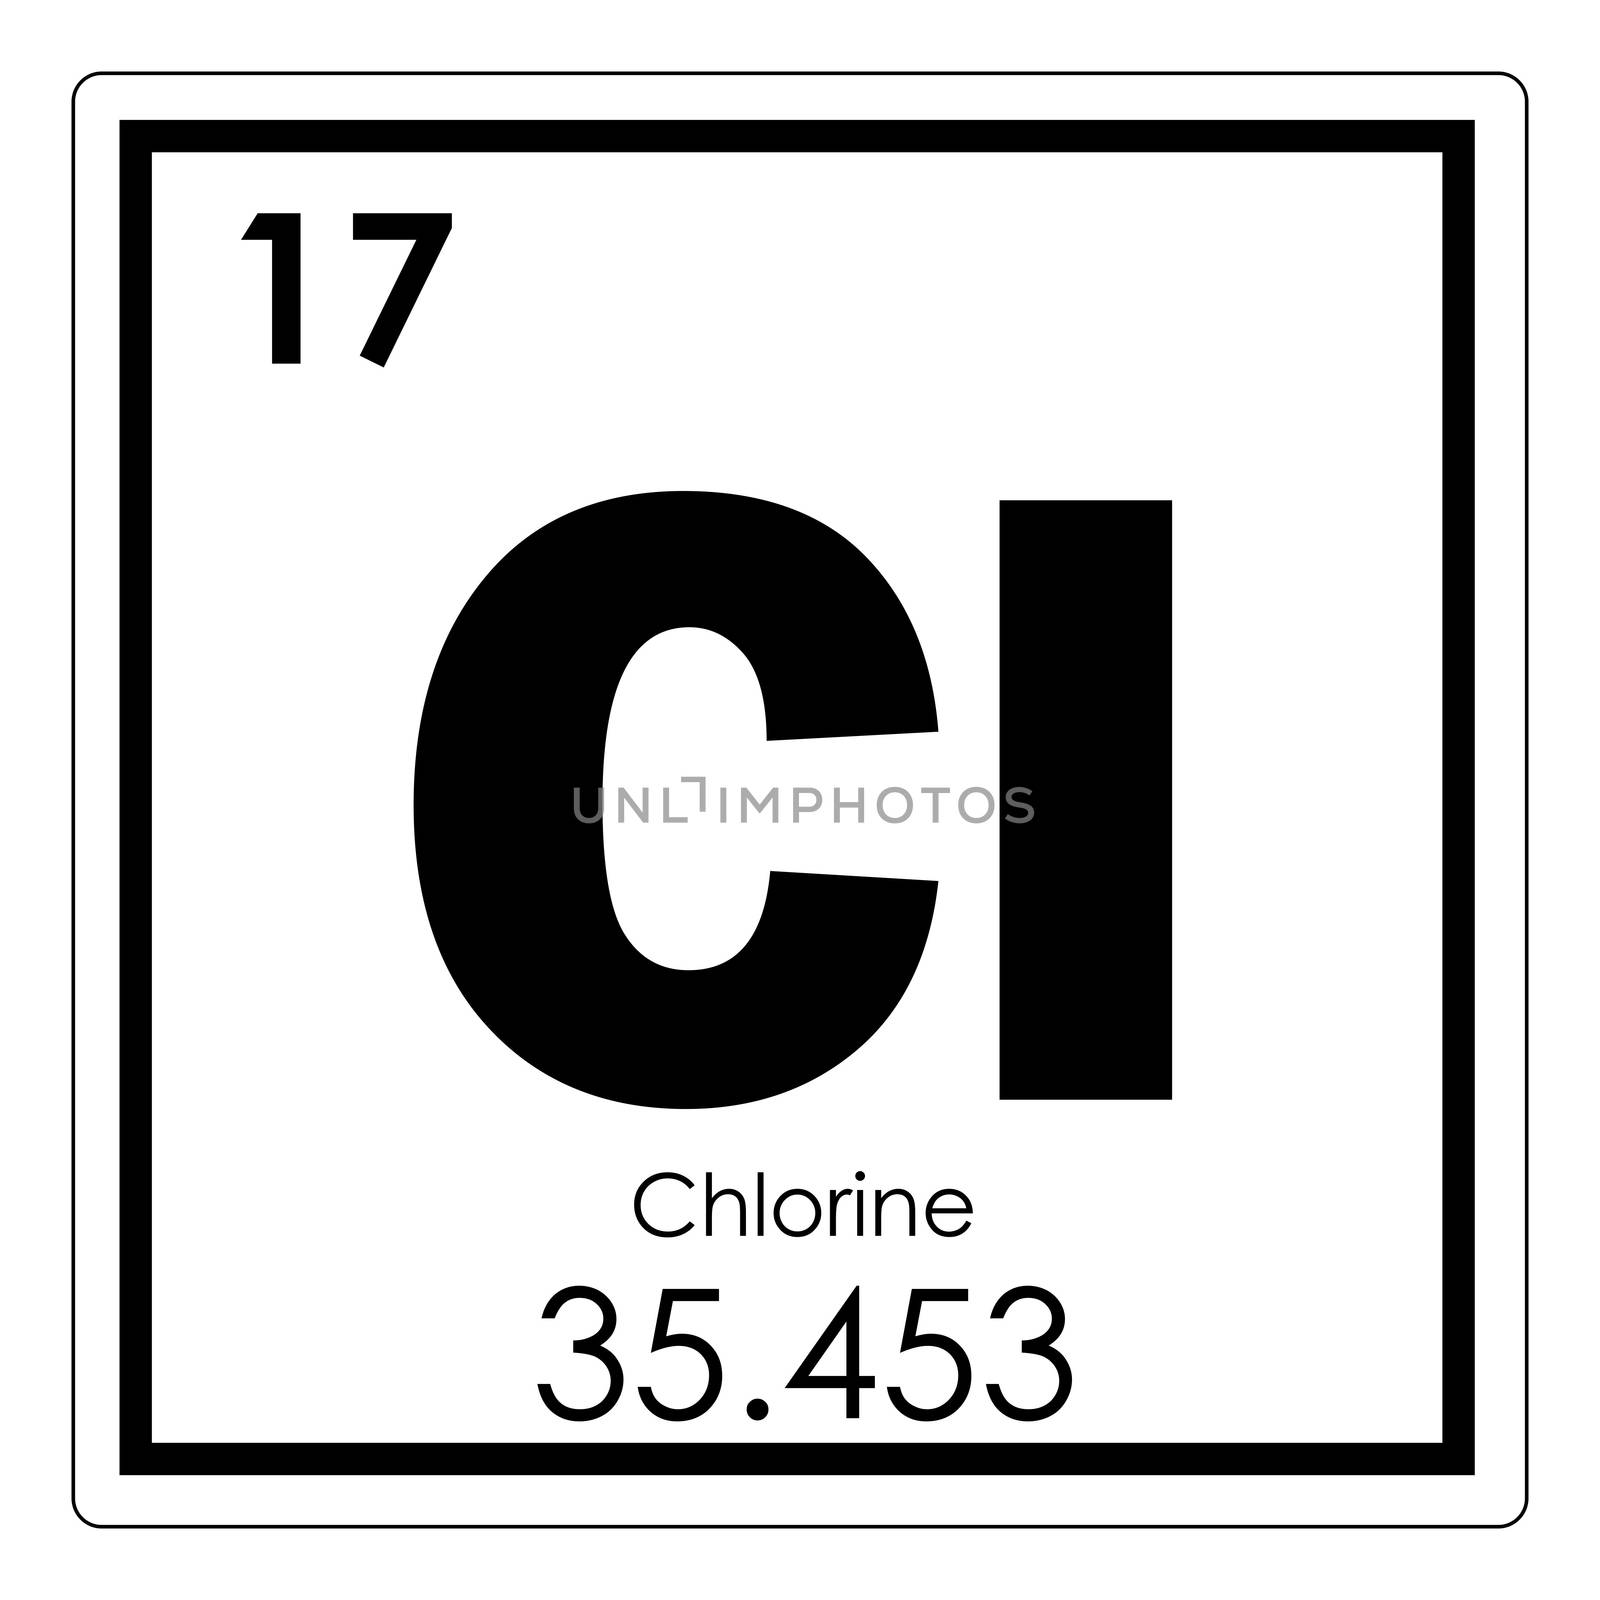 Chlorine chemical element by tony4urban